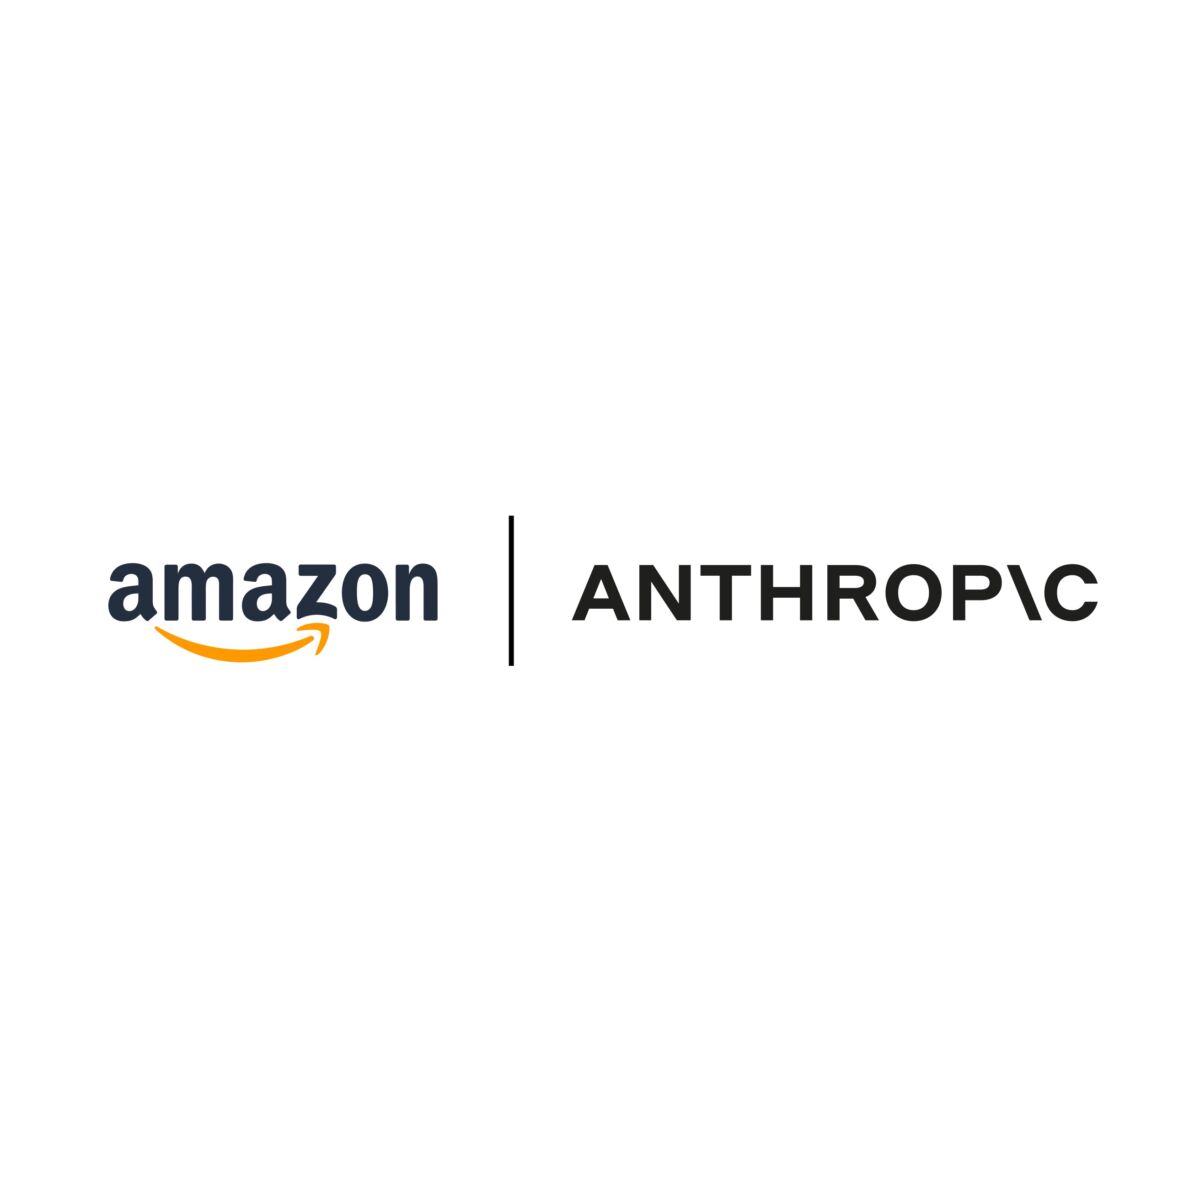 Amazon Anthropic Collaboration